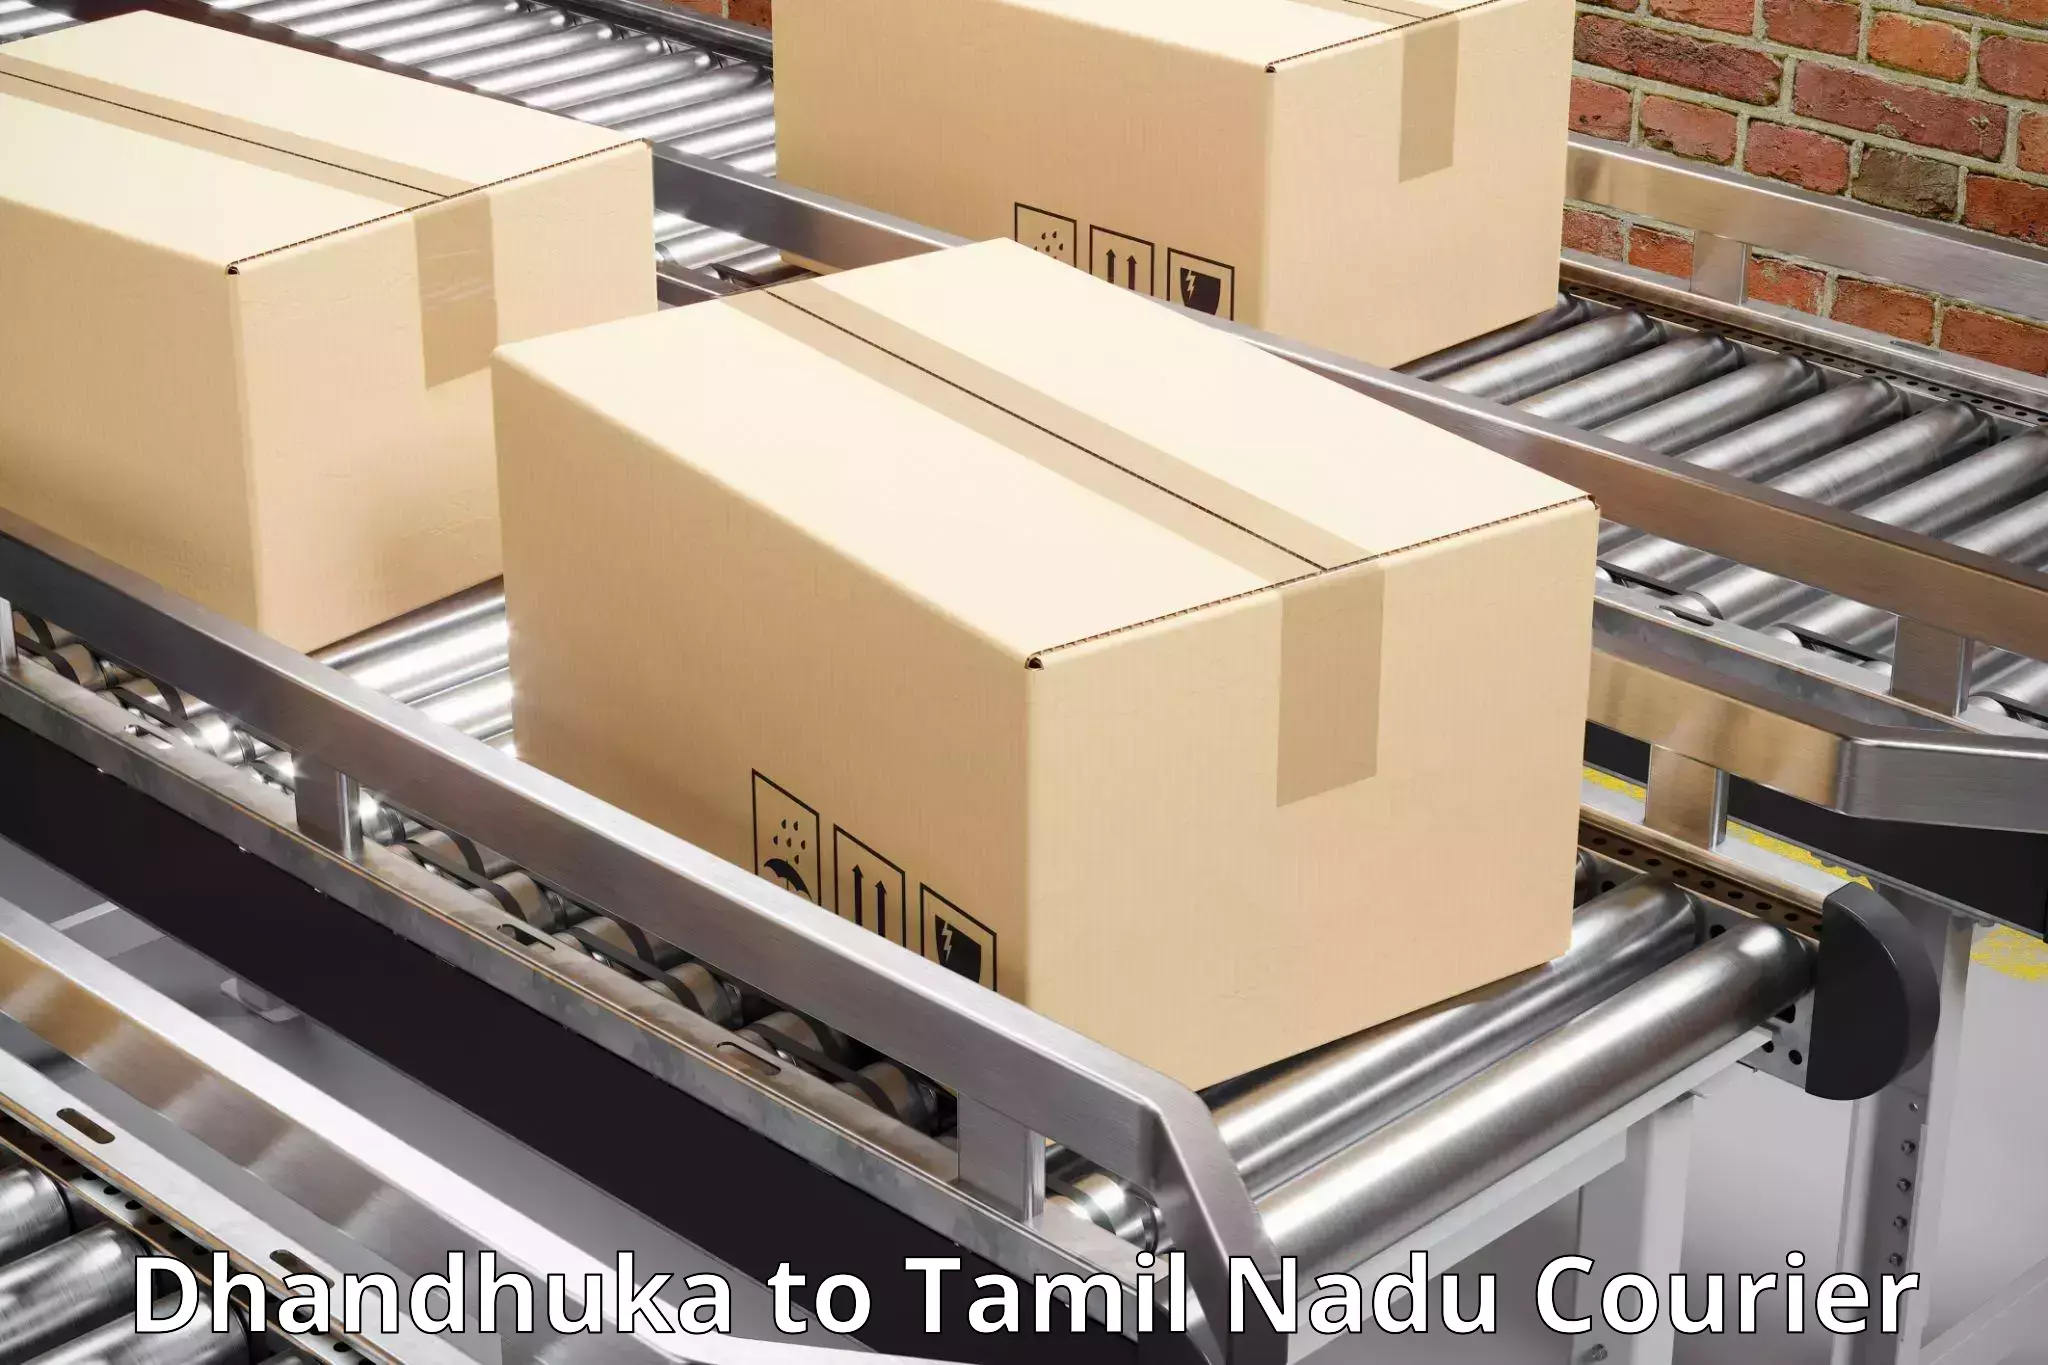 Doorstep delivery service Dhandhuka to Tamil Nadu